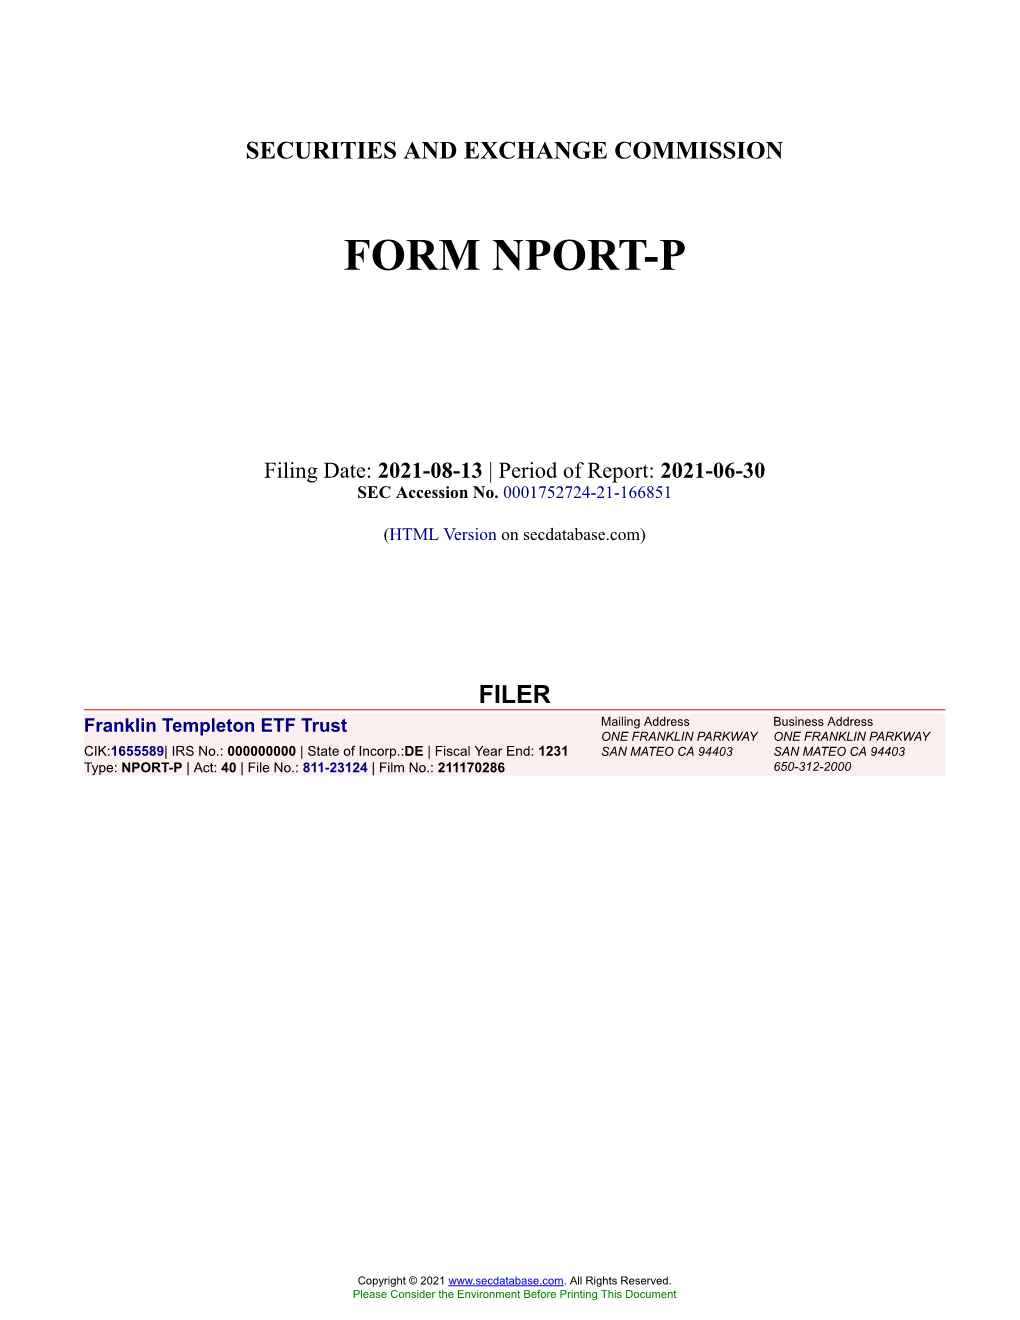 Franklin Templeton ETF Trust Form NPORT-P Filed 2021-08-13